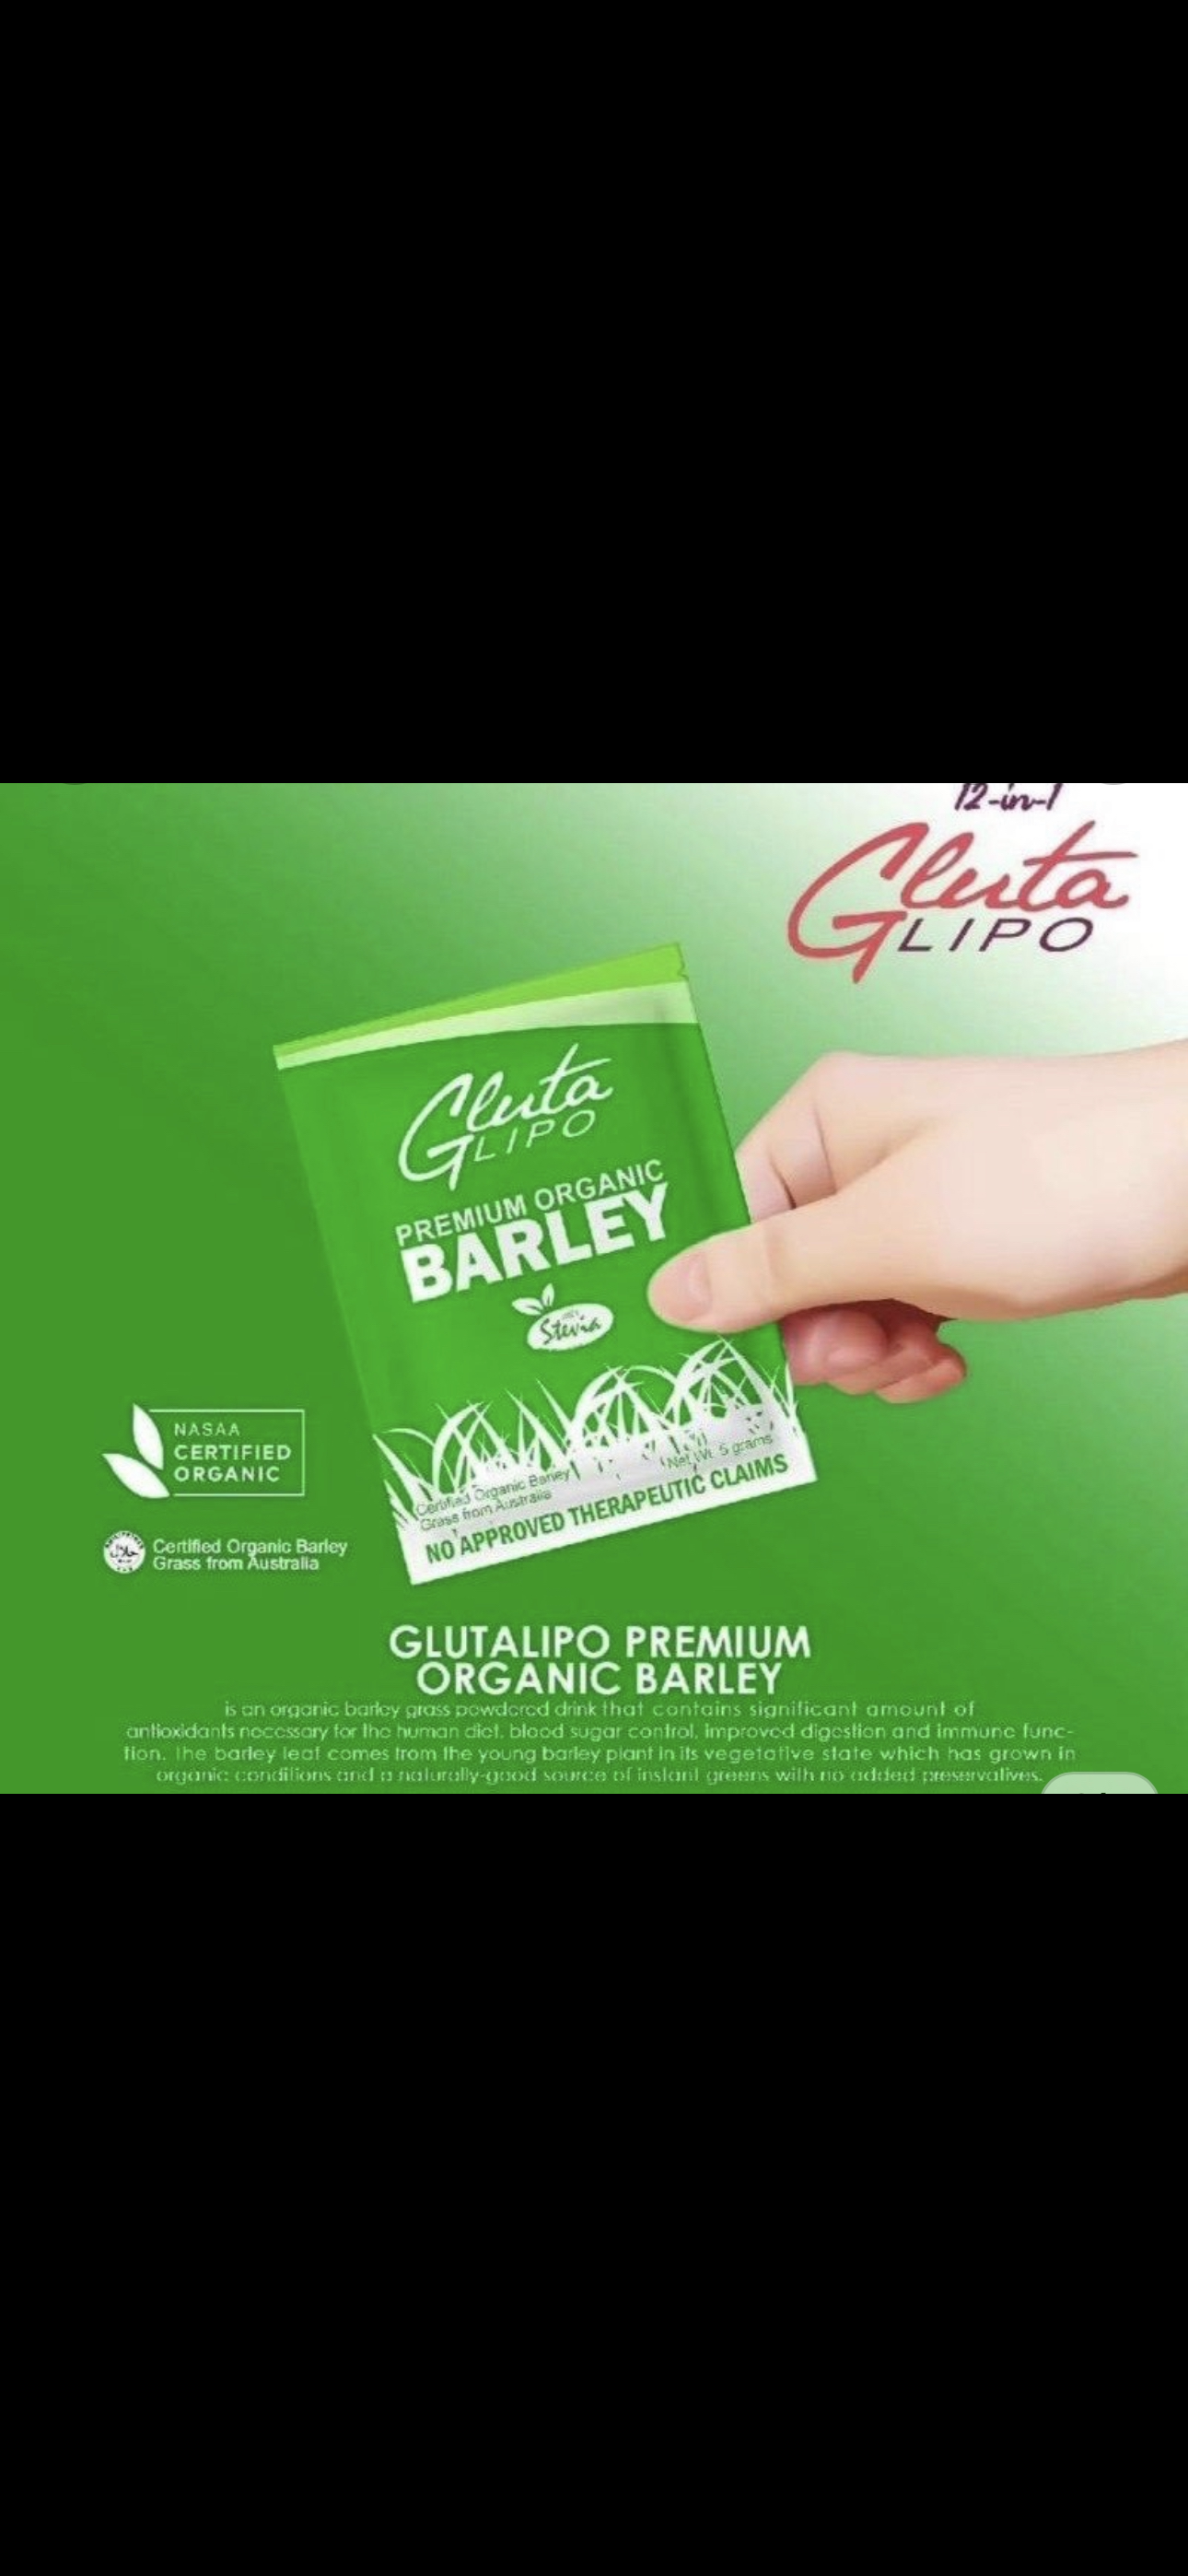 Gluta lipo premium organic barley